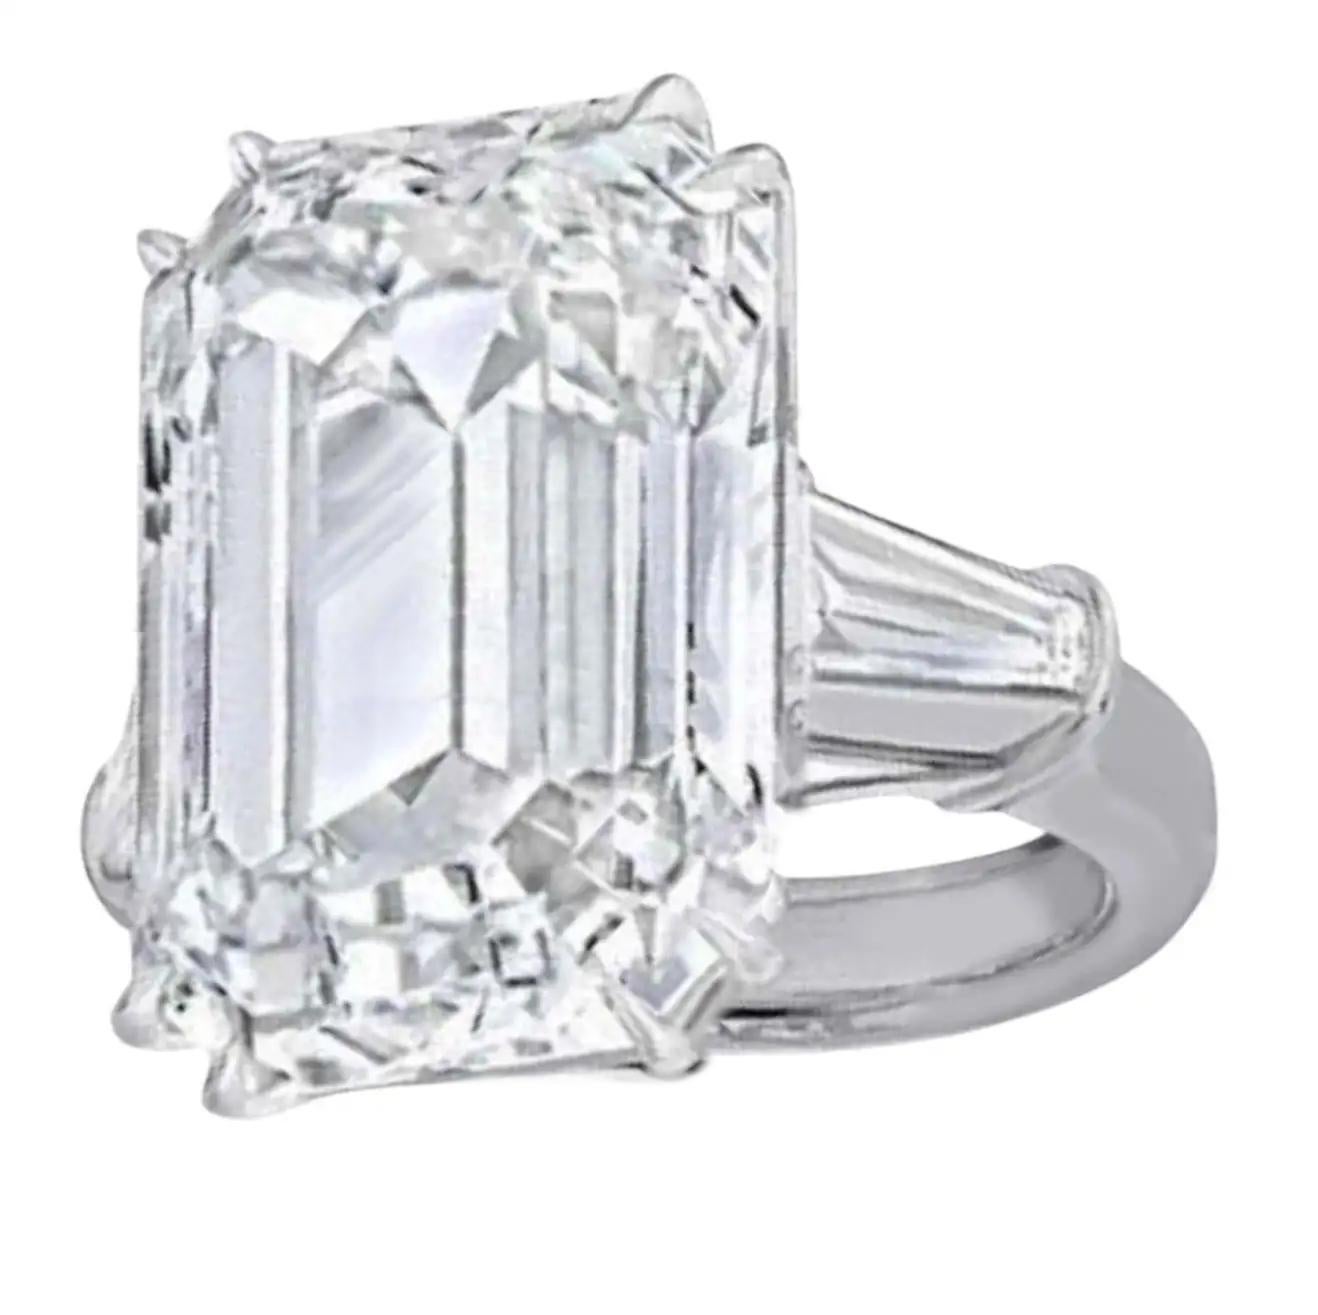 8 carat emerald cut diamond ring price